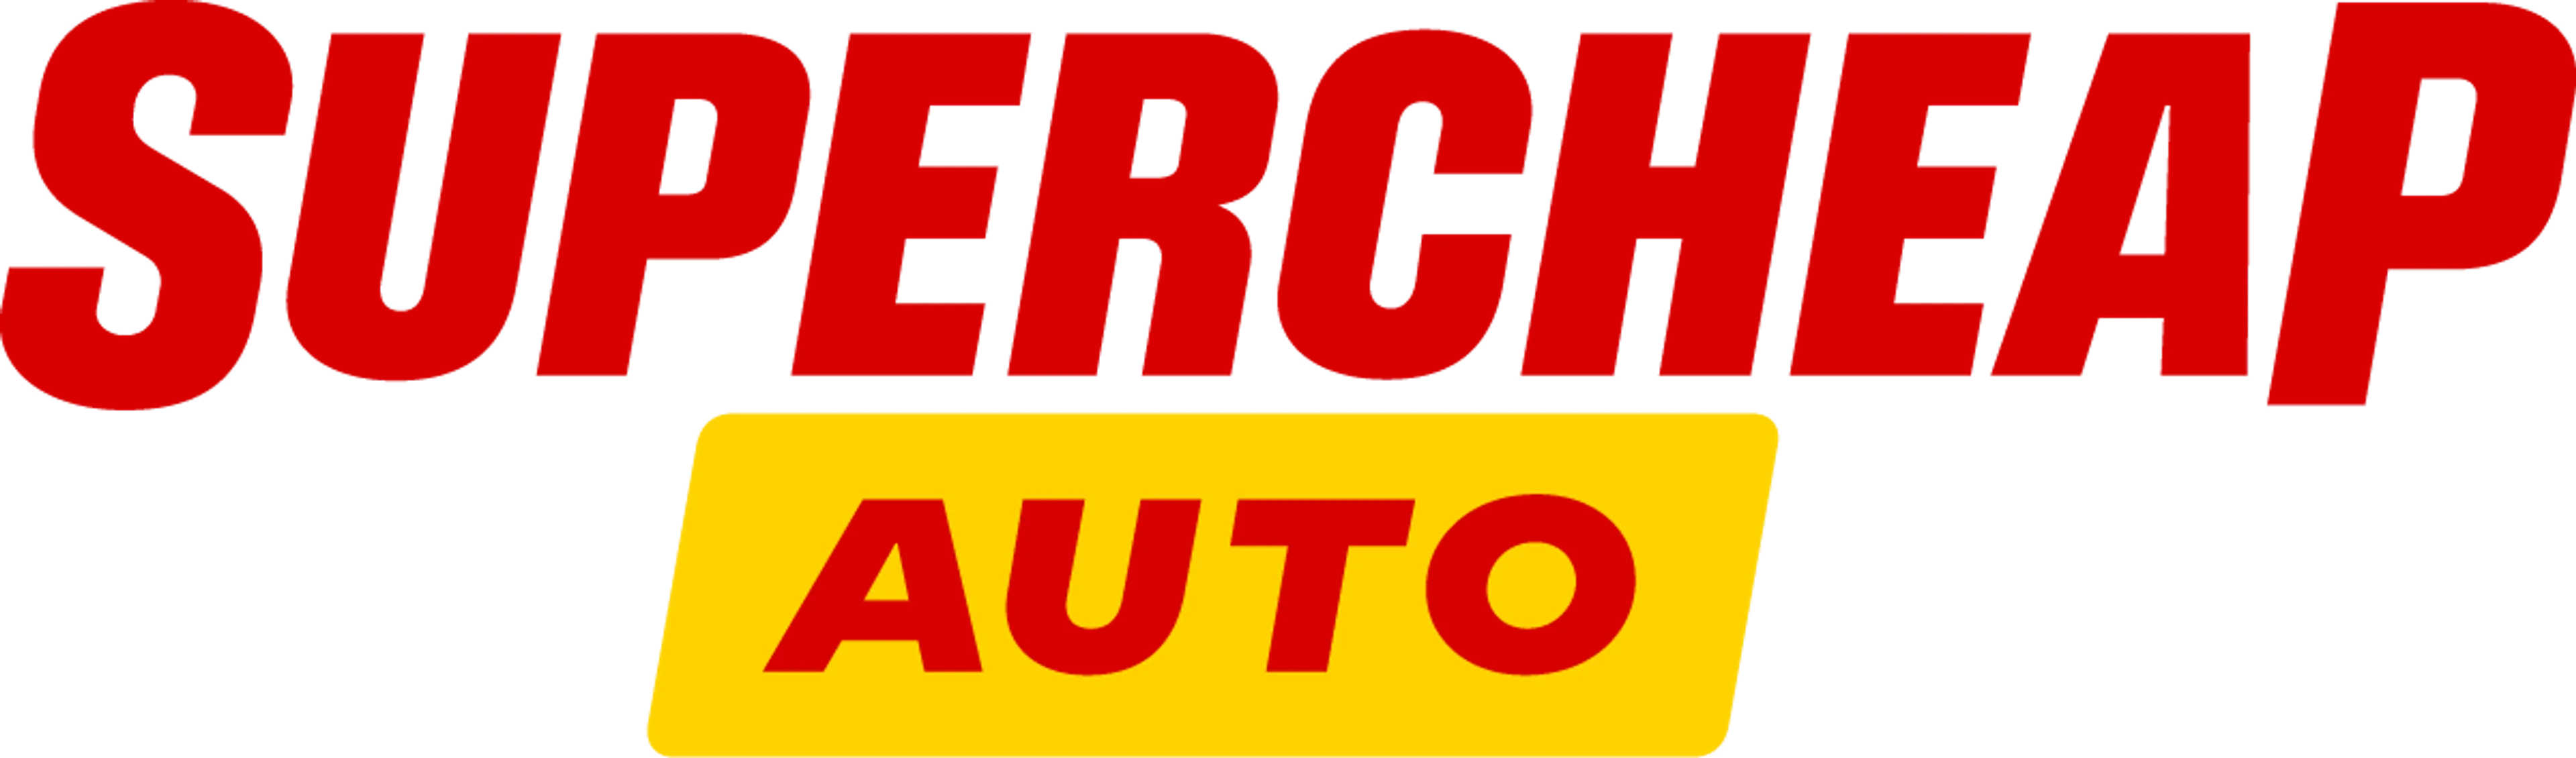 SUPERCHEAP AUTO logo